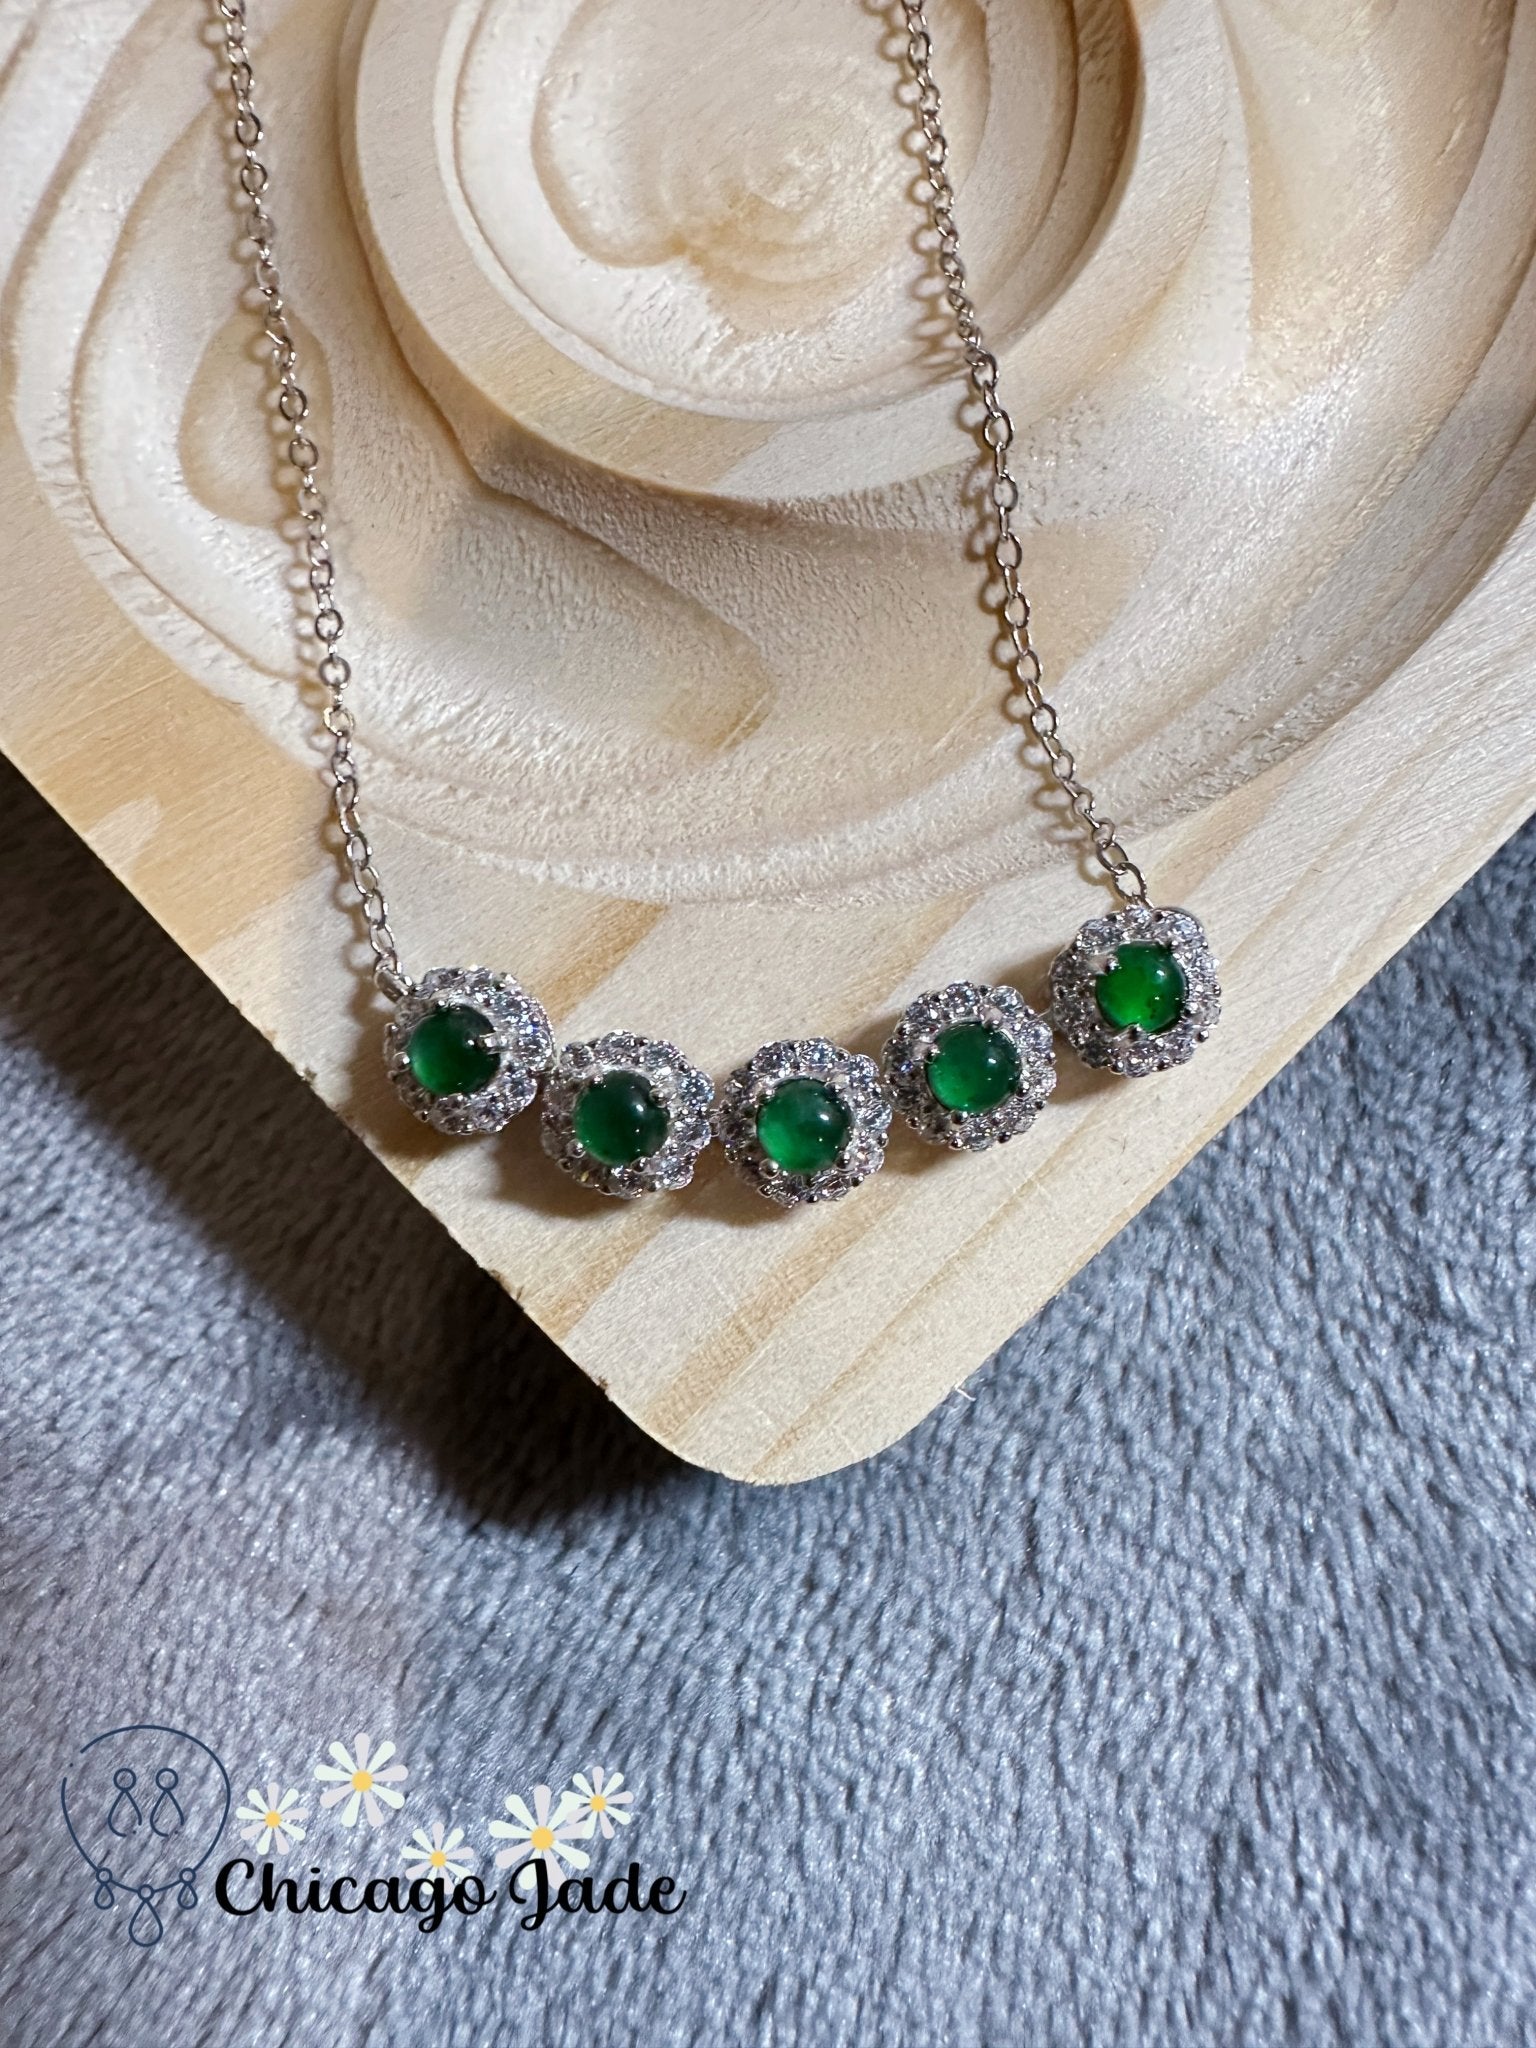 Five stone smiling sterling S925 silver necklace with bright green jadeite jade stones - Chicago Jadeanniversarybirthday giftengagementChicago Jade